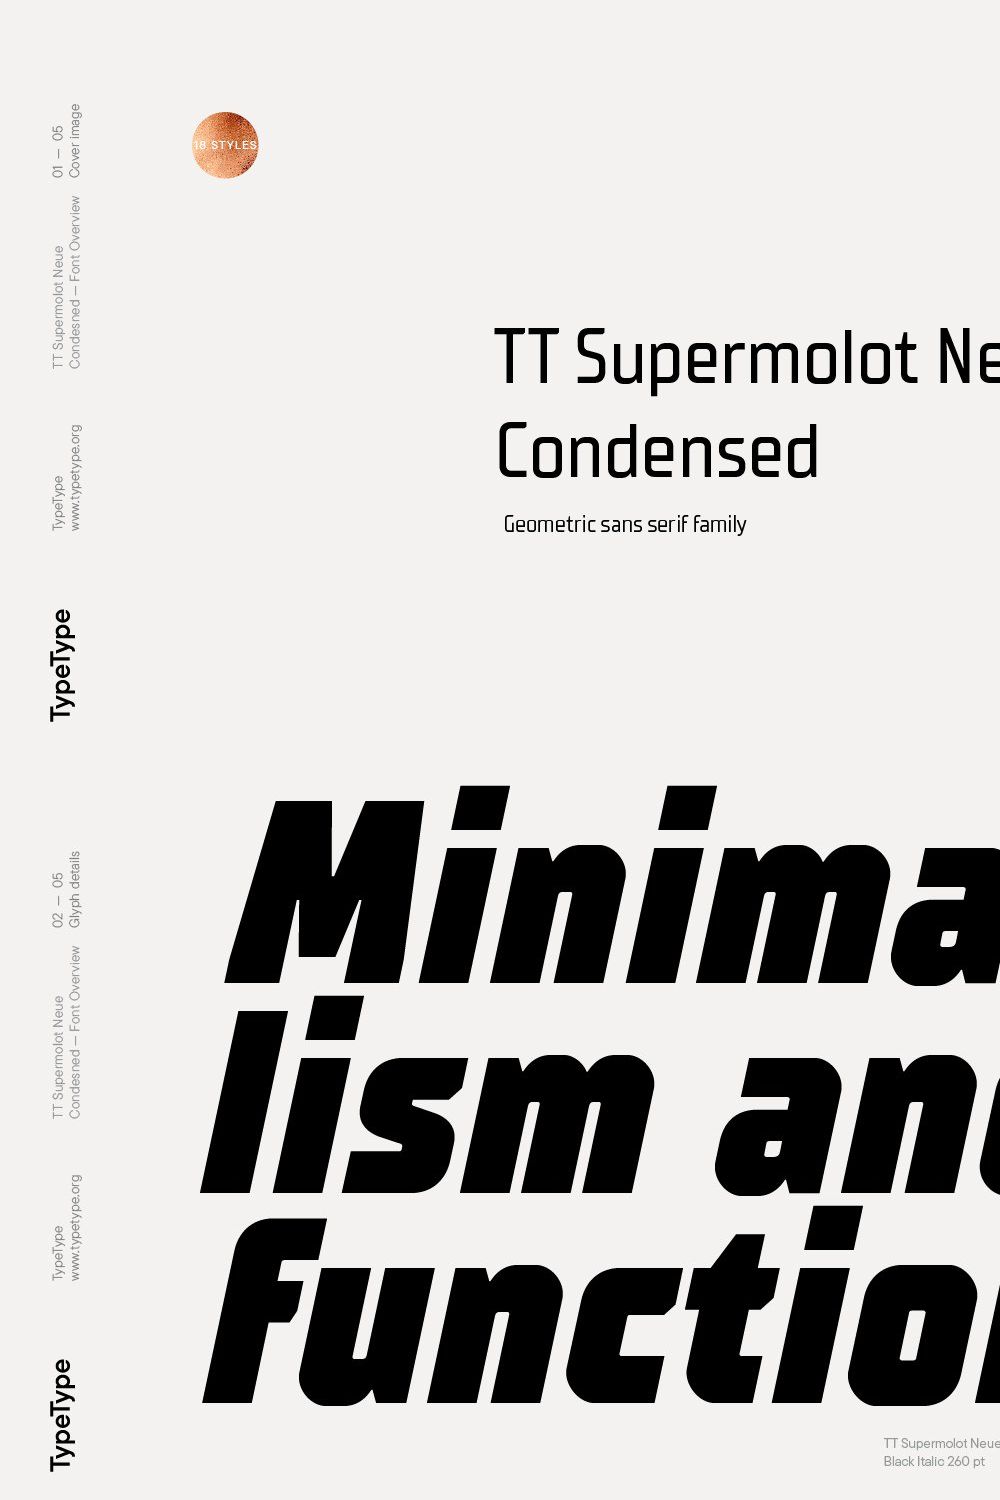 TT Supermolot Neue Condensed pinterest preview image.